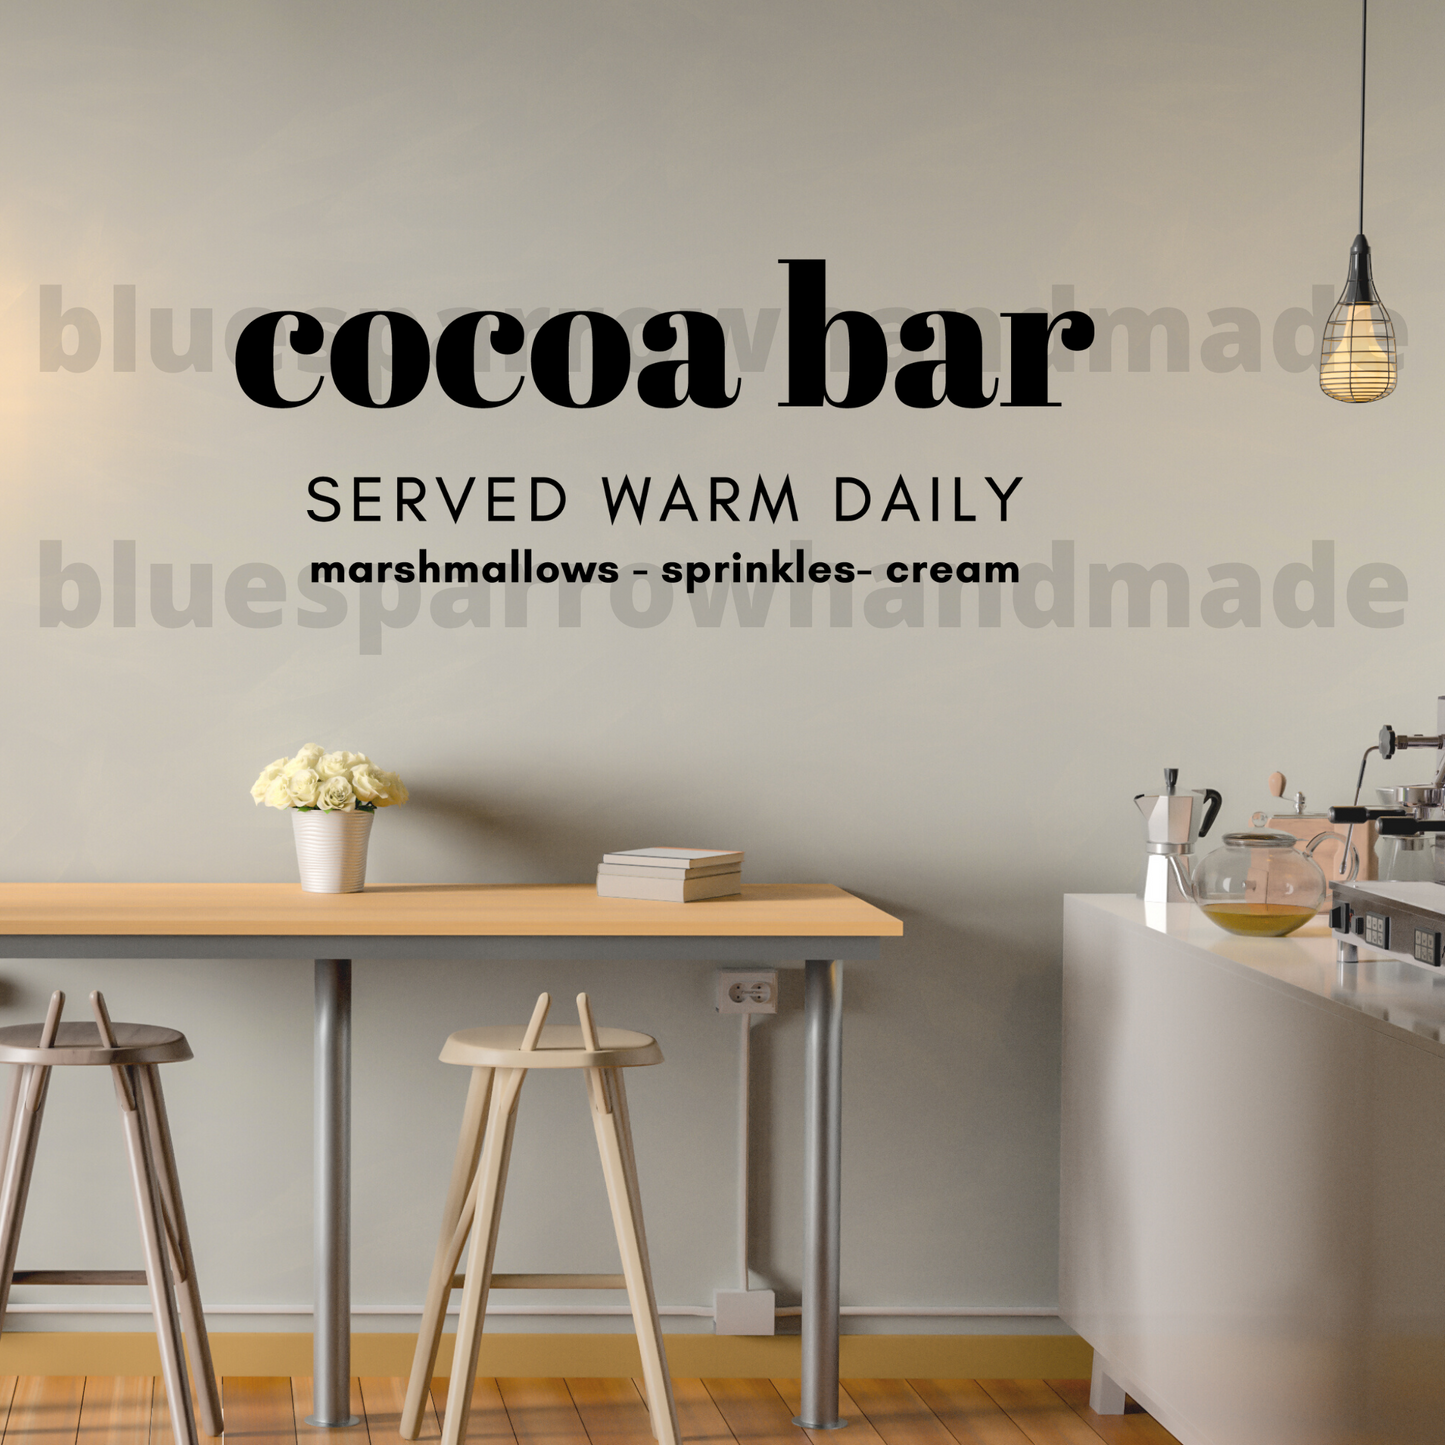 Hot Cocoa Bar Graphic Bundle